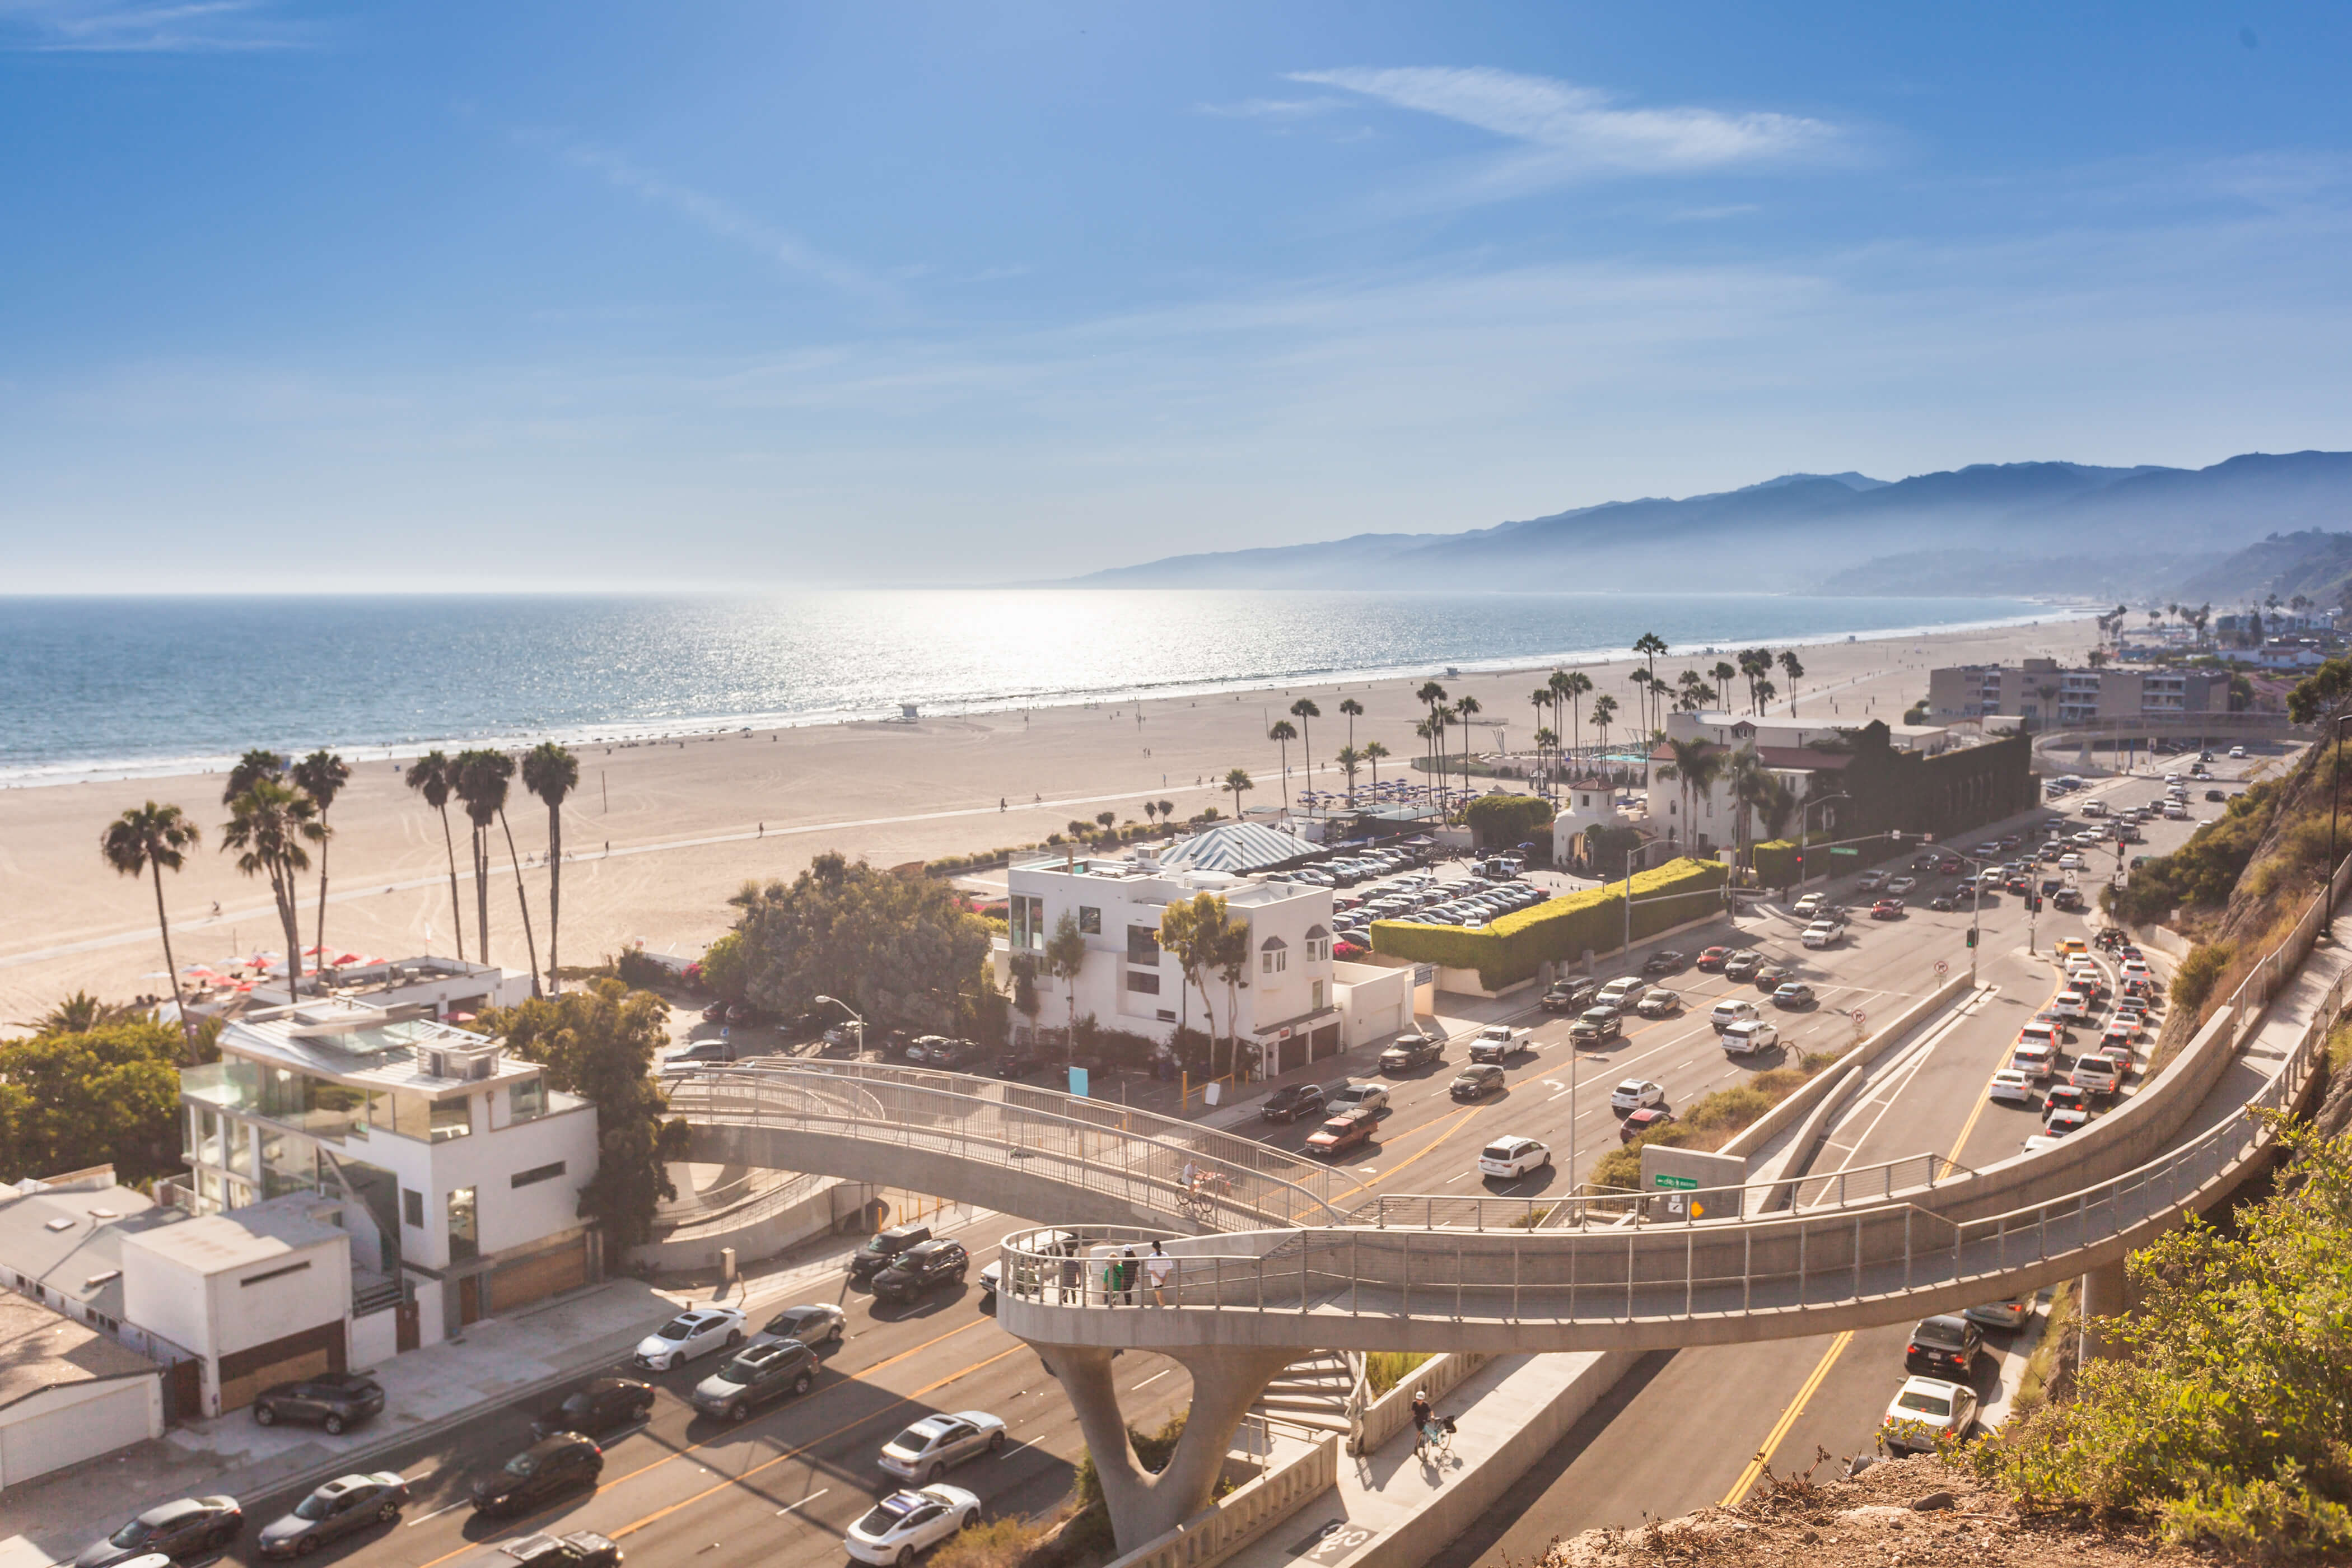 3 Beach Cities to Visit in LA